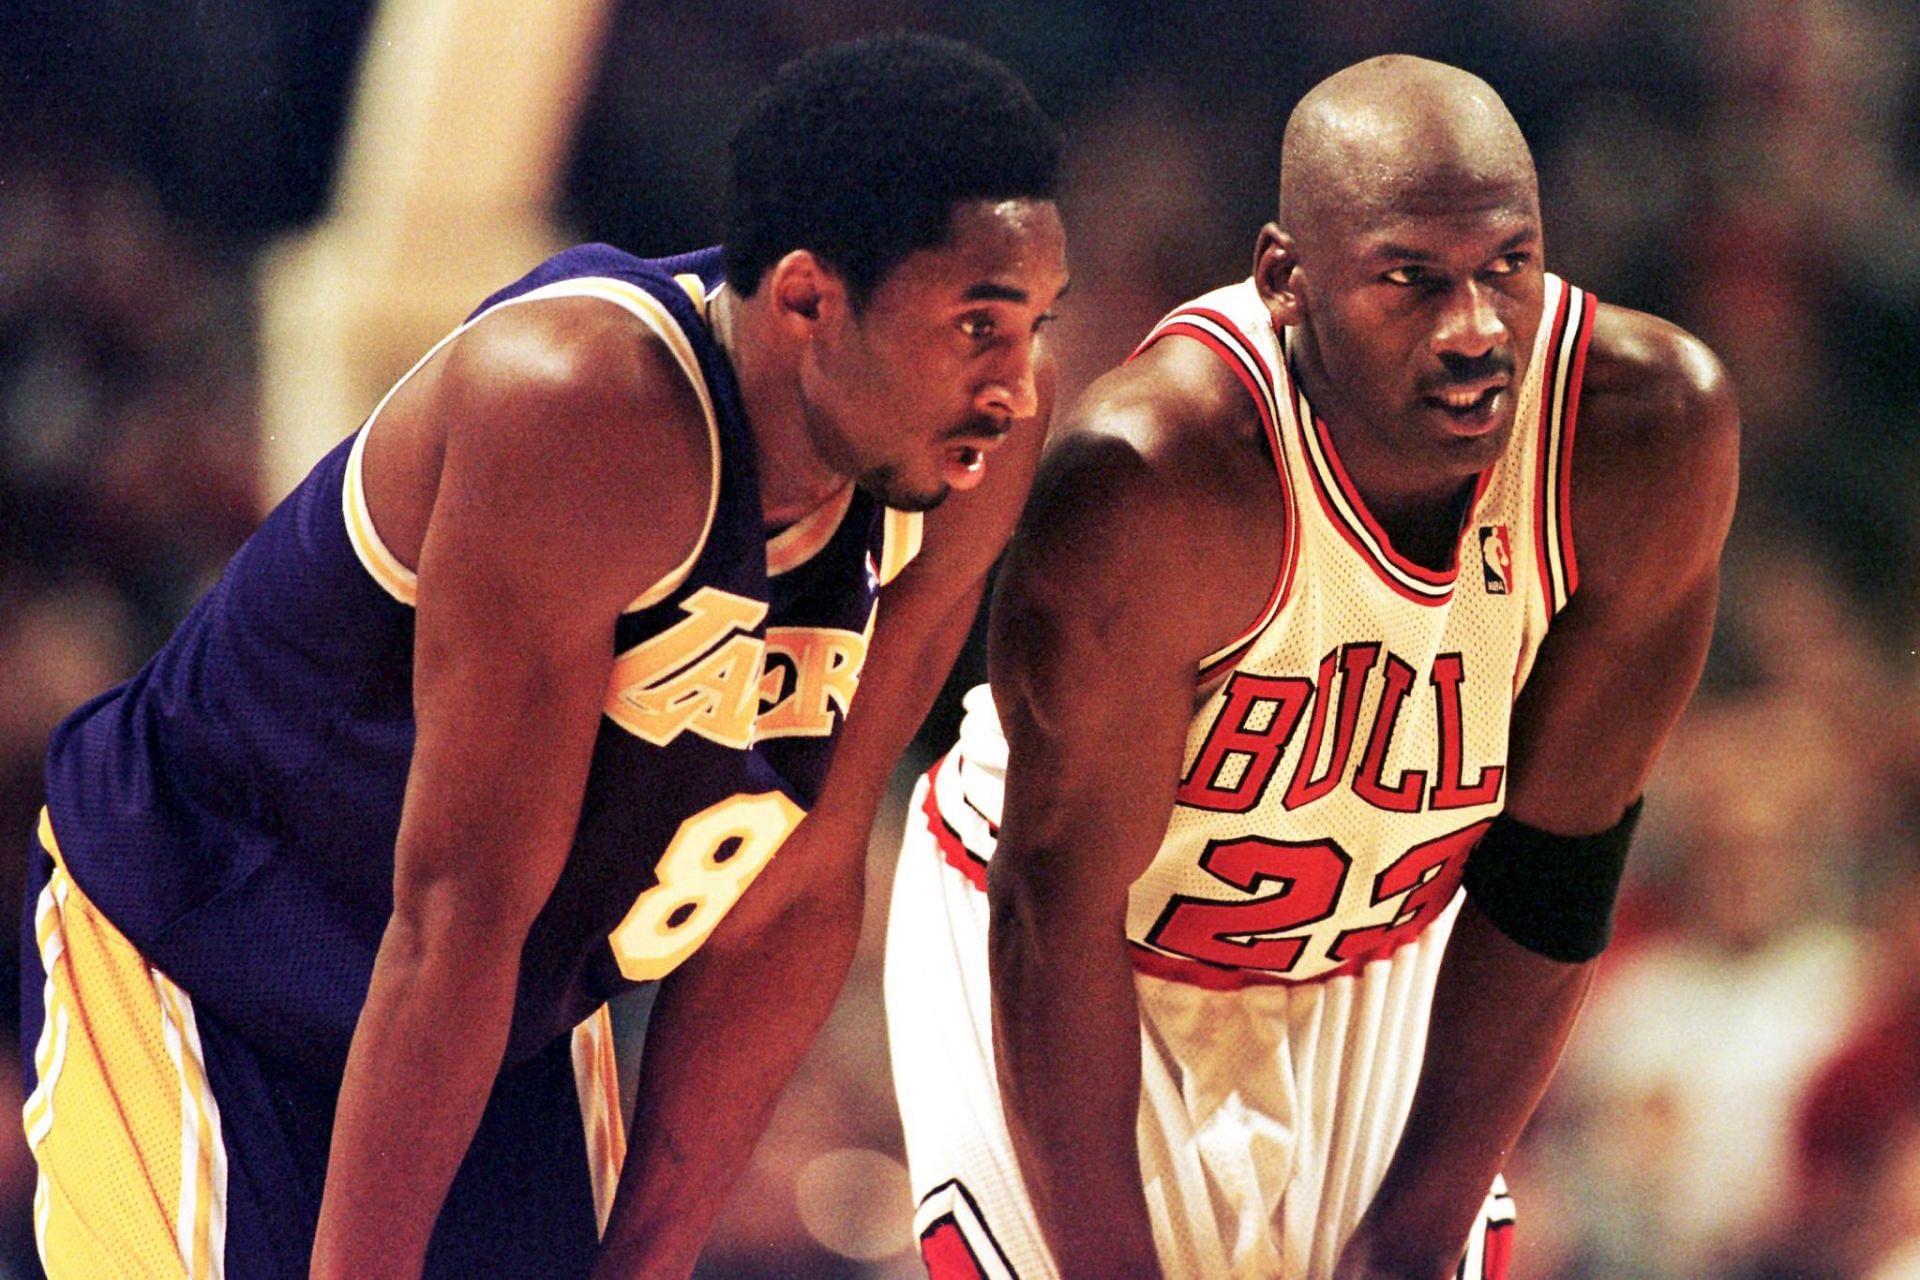 Chicago Bulls legend Michael Jordan and Los Angeles Lakers legend Kobe Bryant